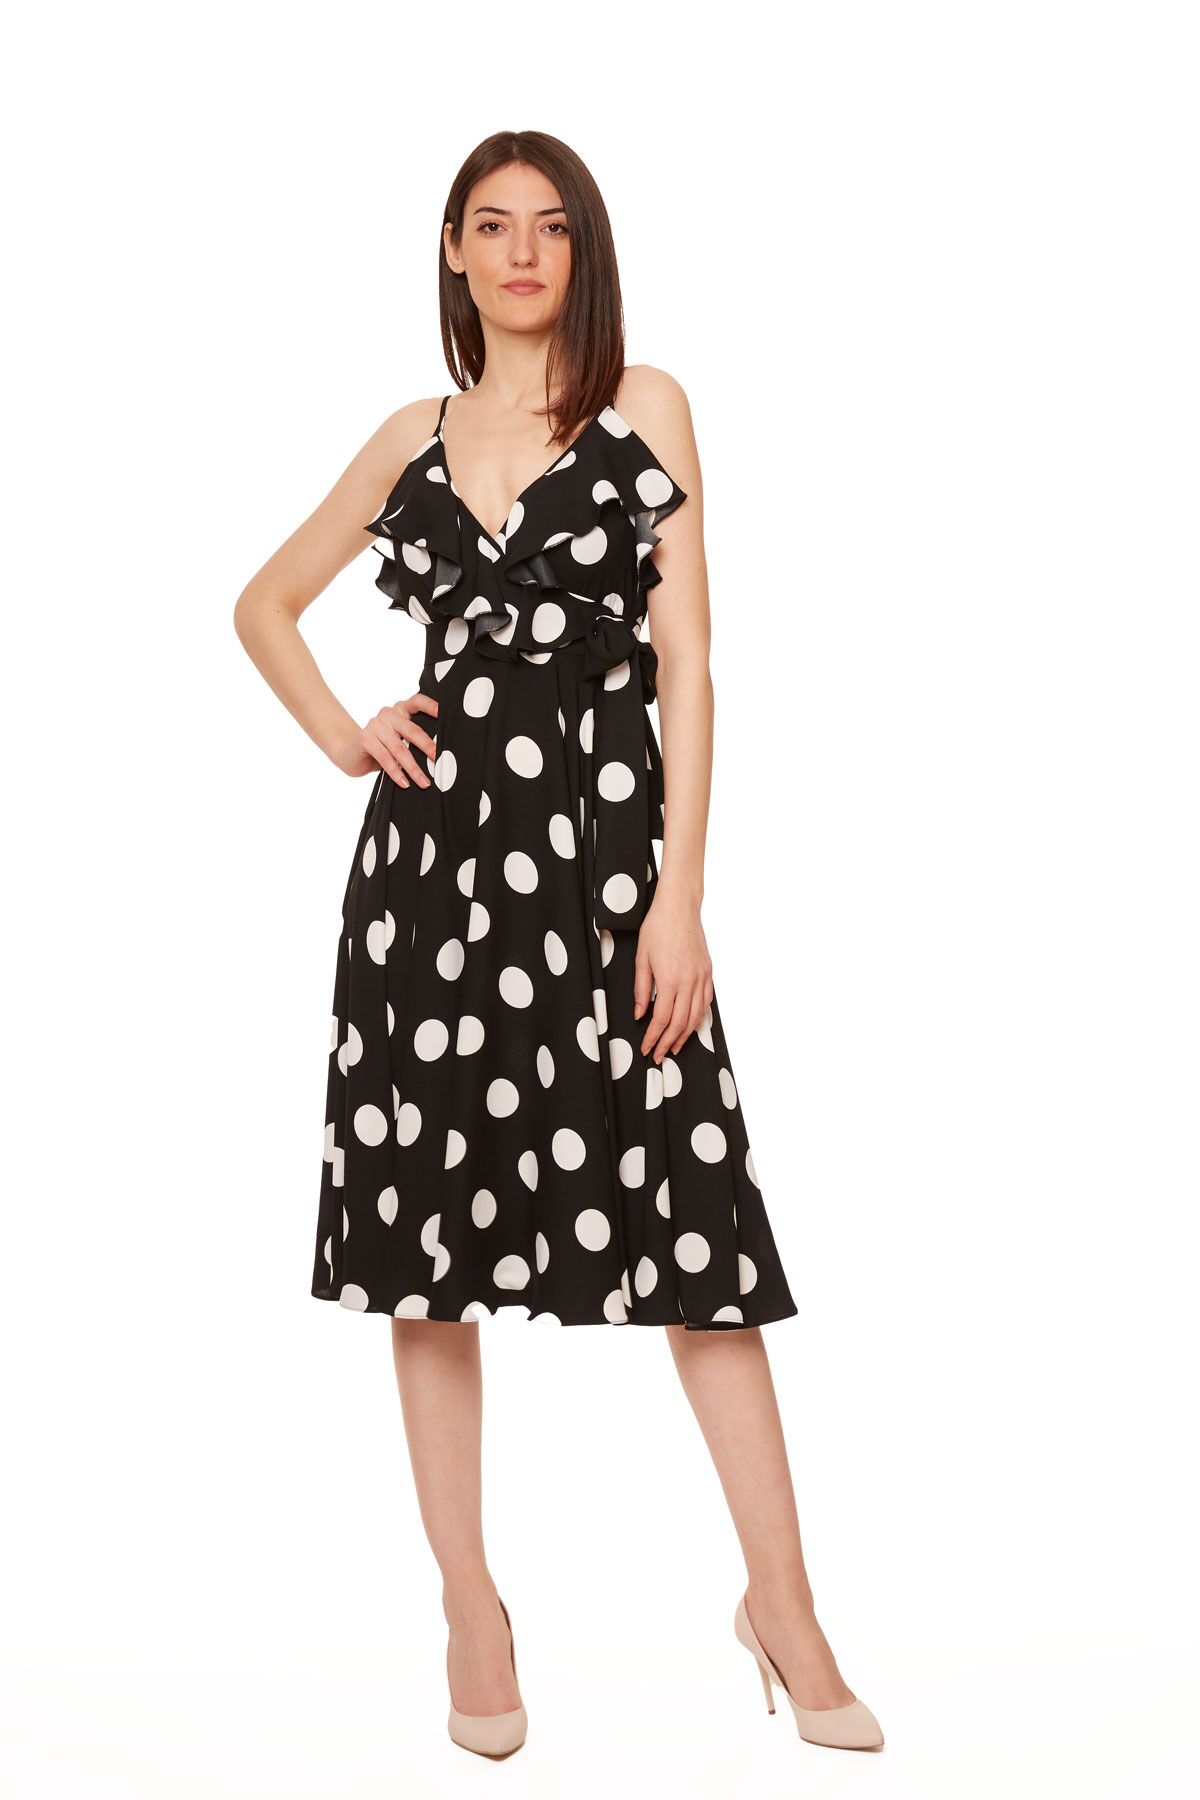 KIWE - Strap Polka Dot Patterned Ruffle Midi Black Dress